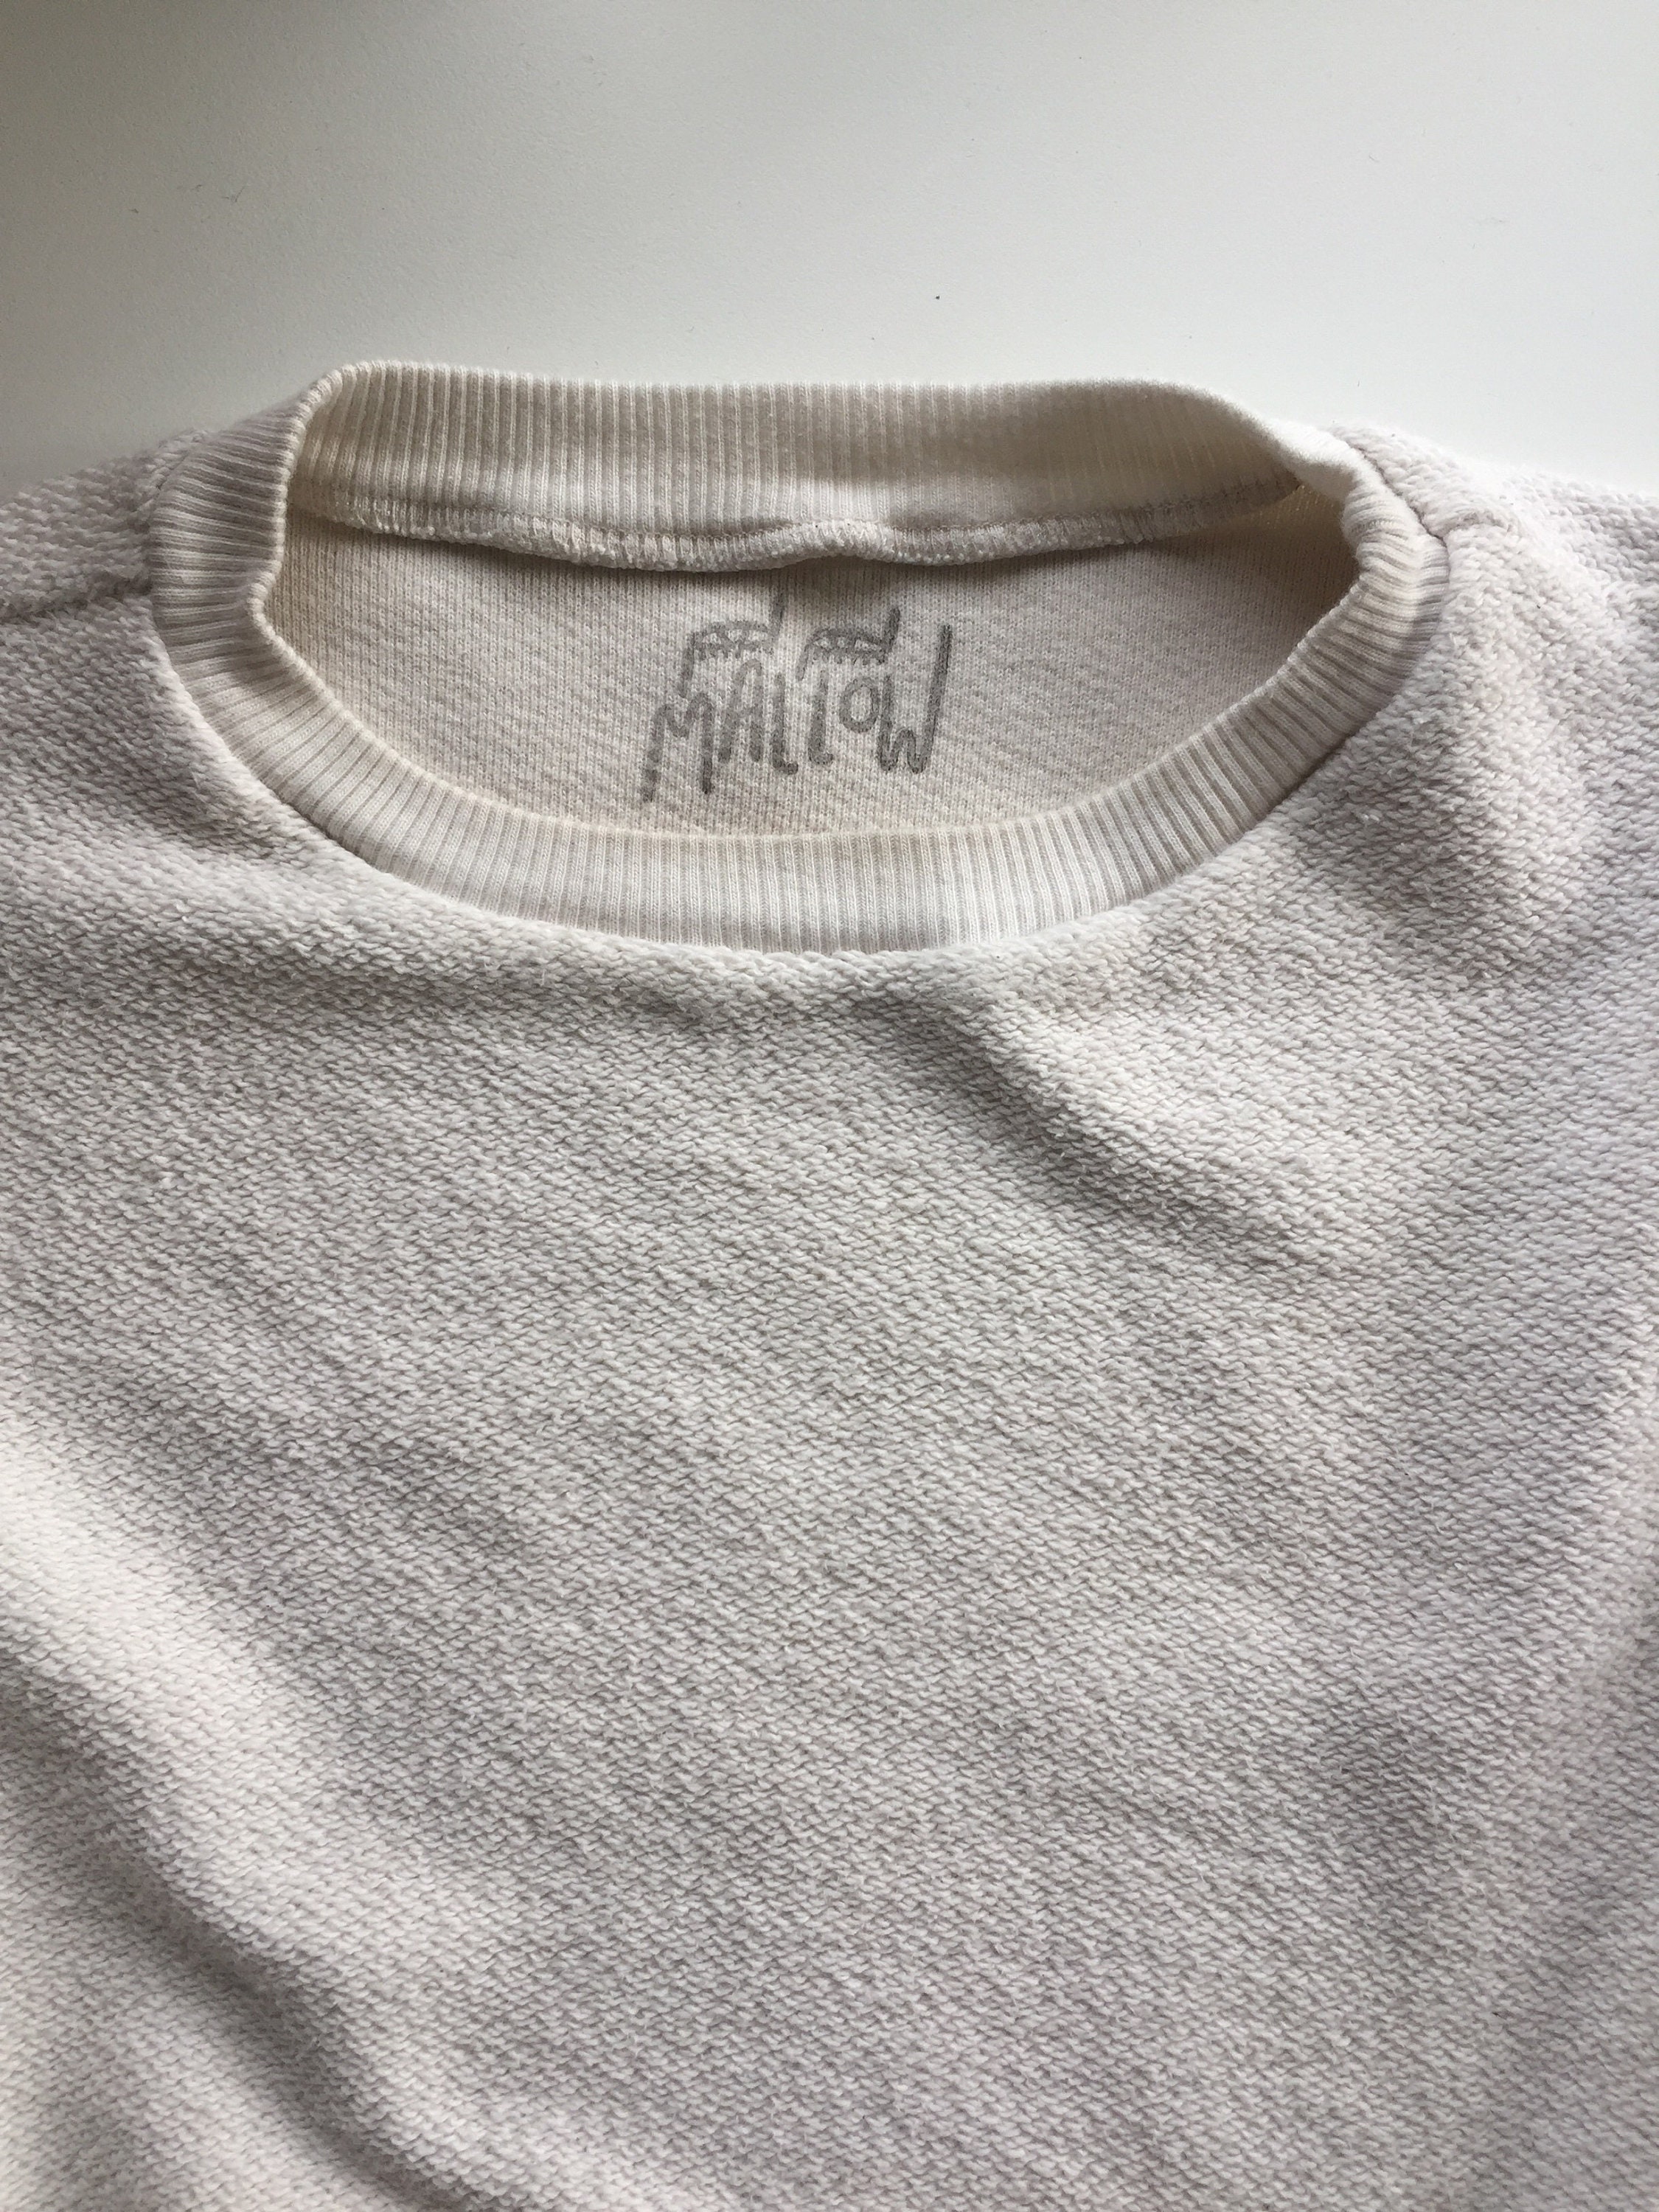 The Marshmallow Sweatshirt | Etsy